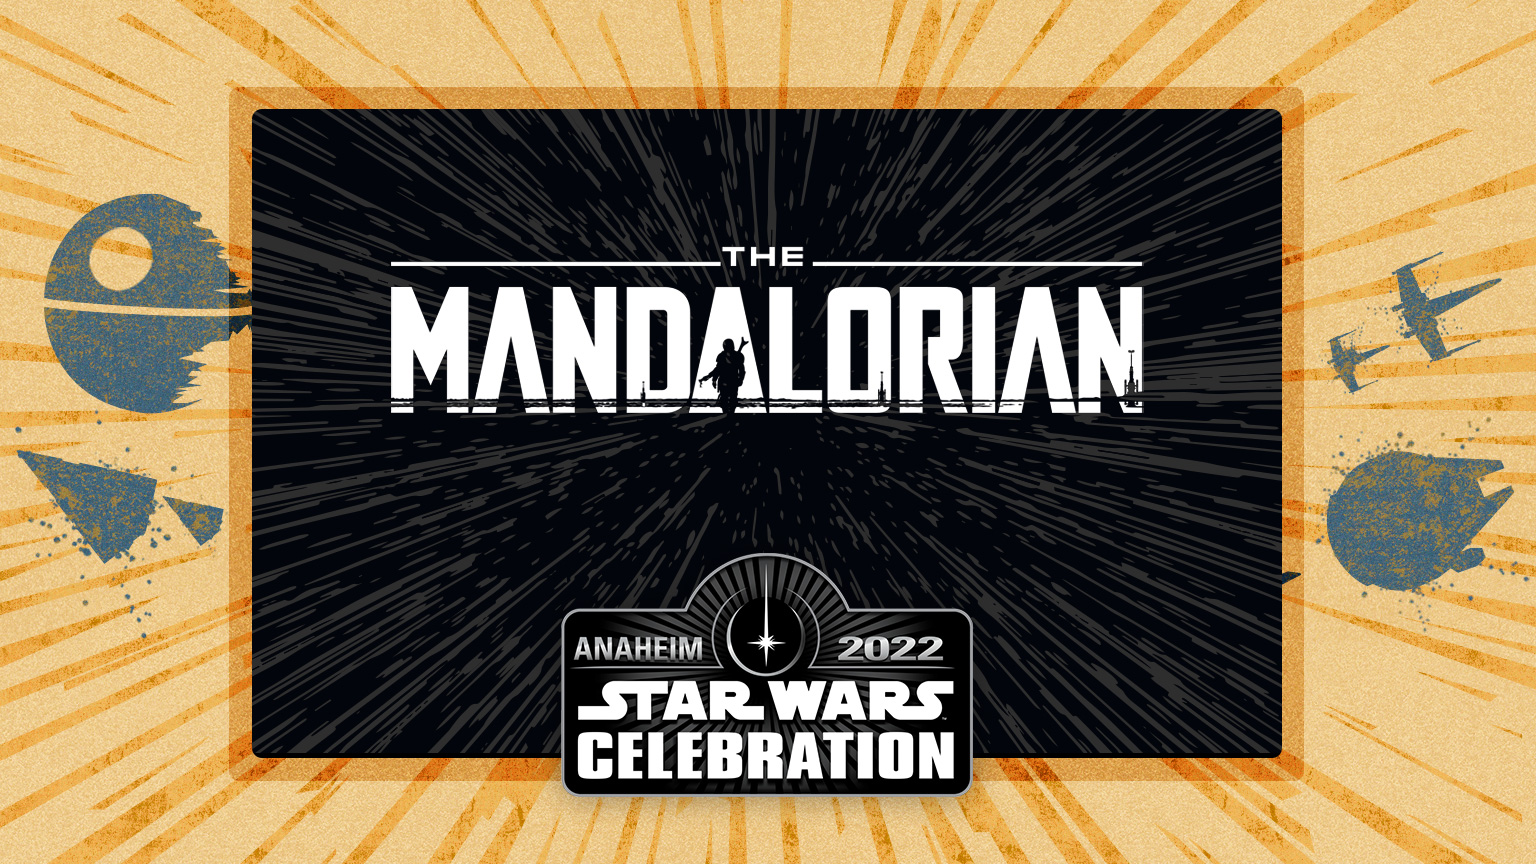 Mando+: A Conversation with Jon Favreau & Dave Filoni